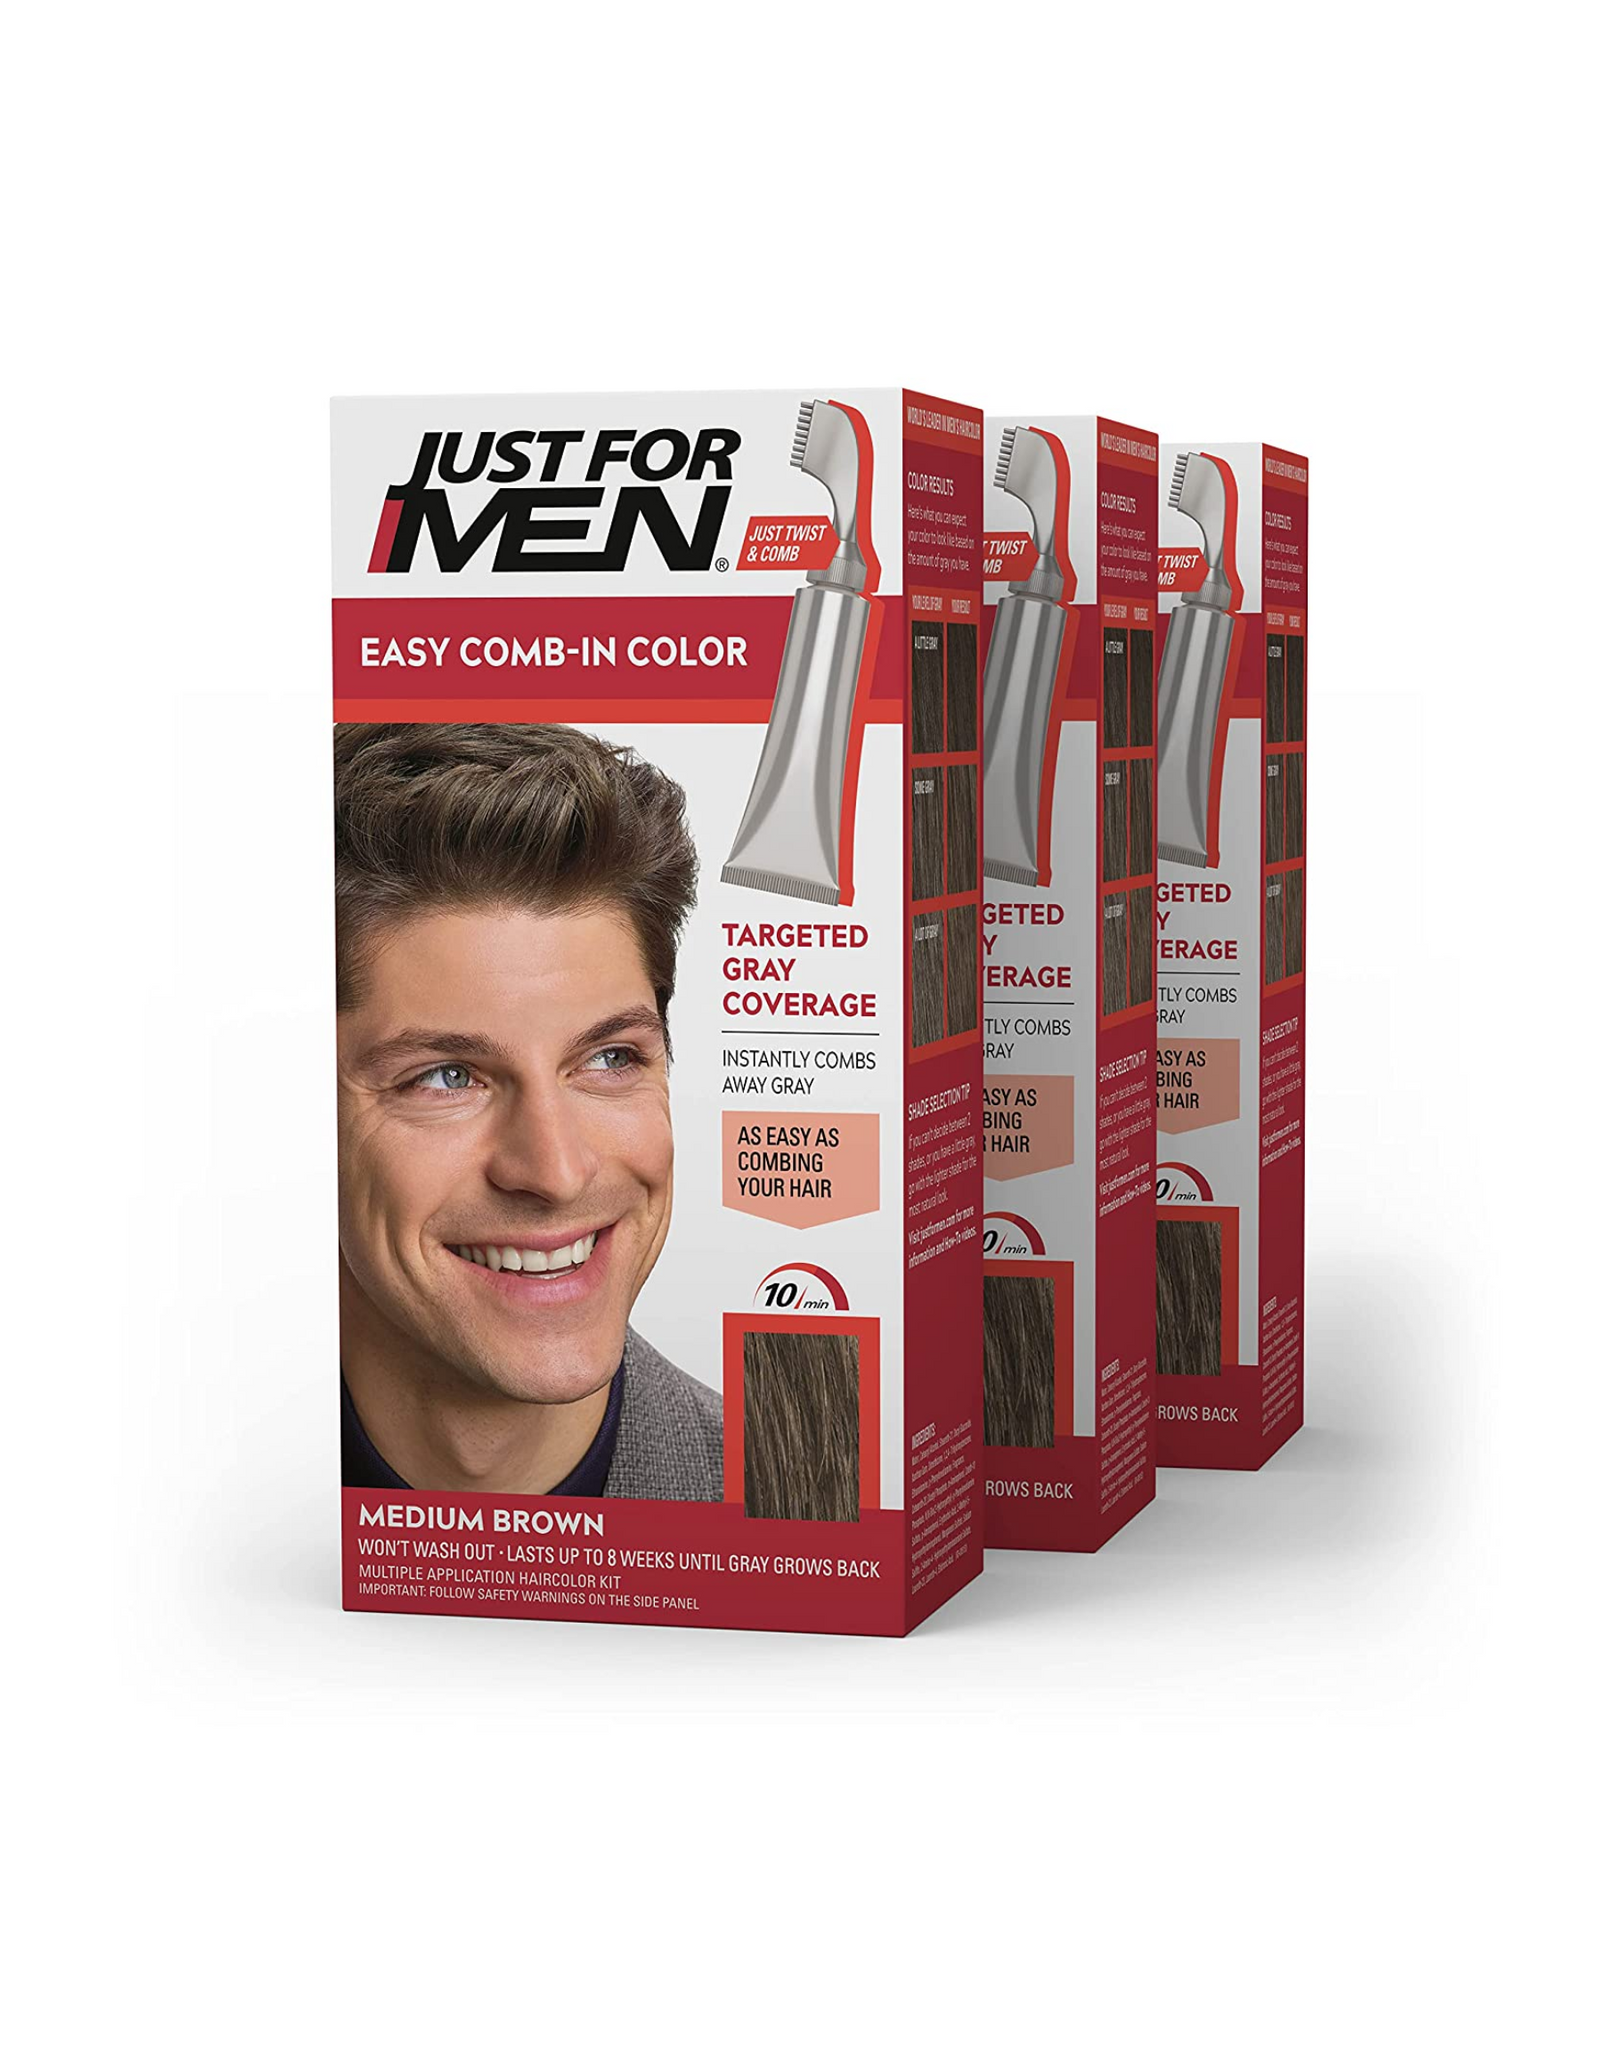 Just For Men Easy Comb-In Color Mens Hair Dye, Medium Brown (Pack of 3)